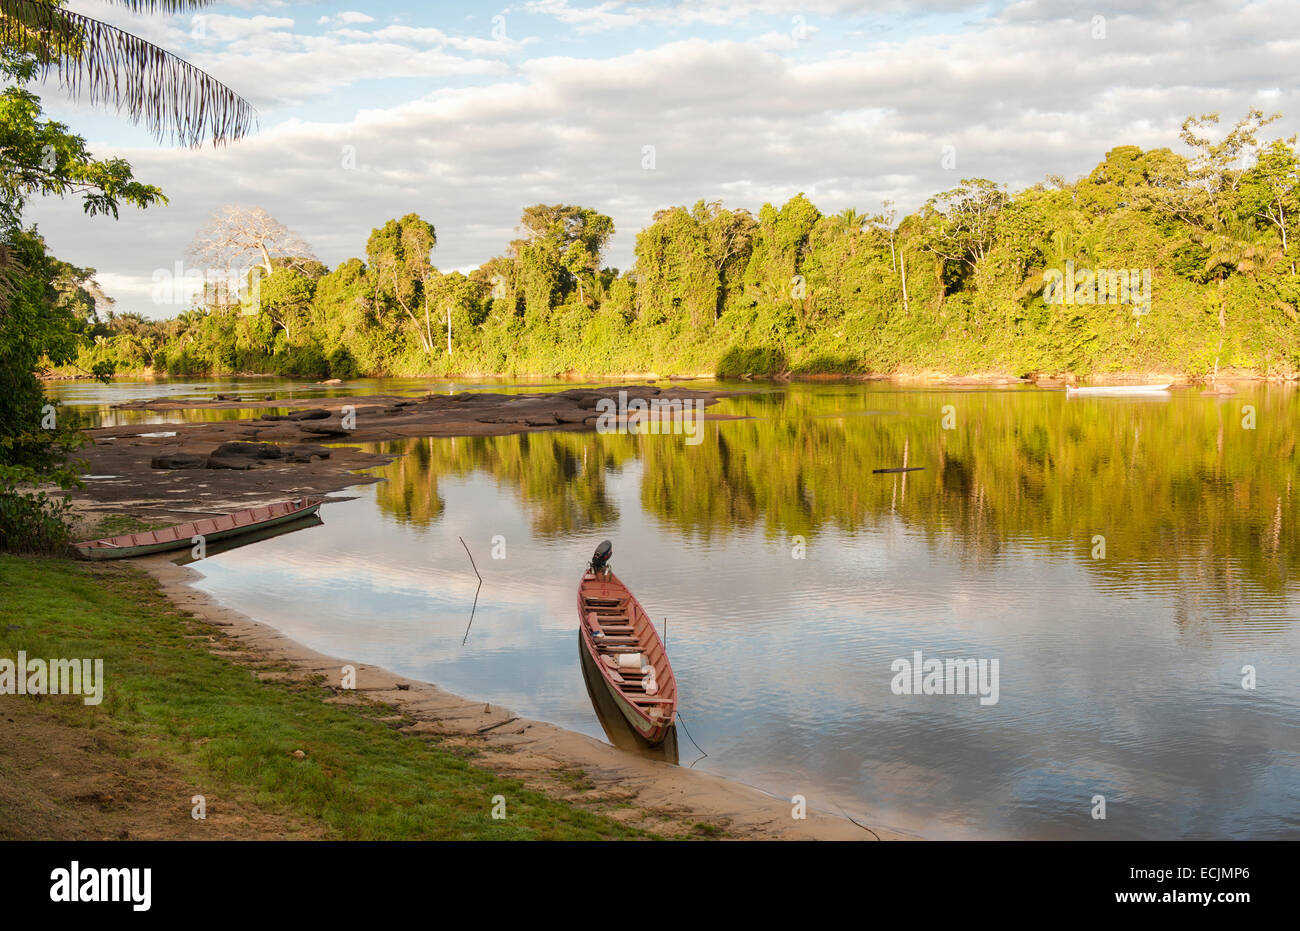 River canoe moored at the banks of Suriname River at Danpaati Lodge, Upper Suriname Stock Photo